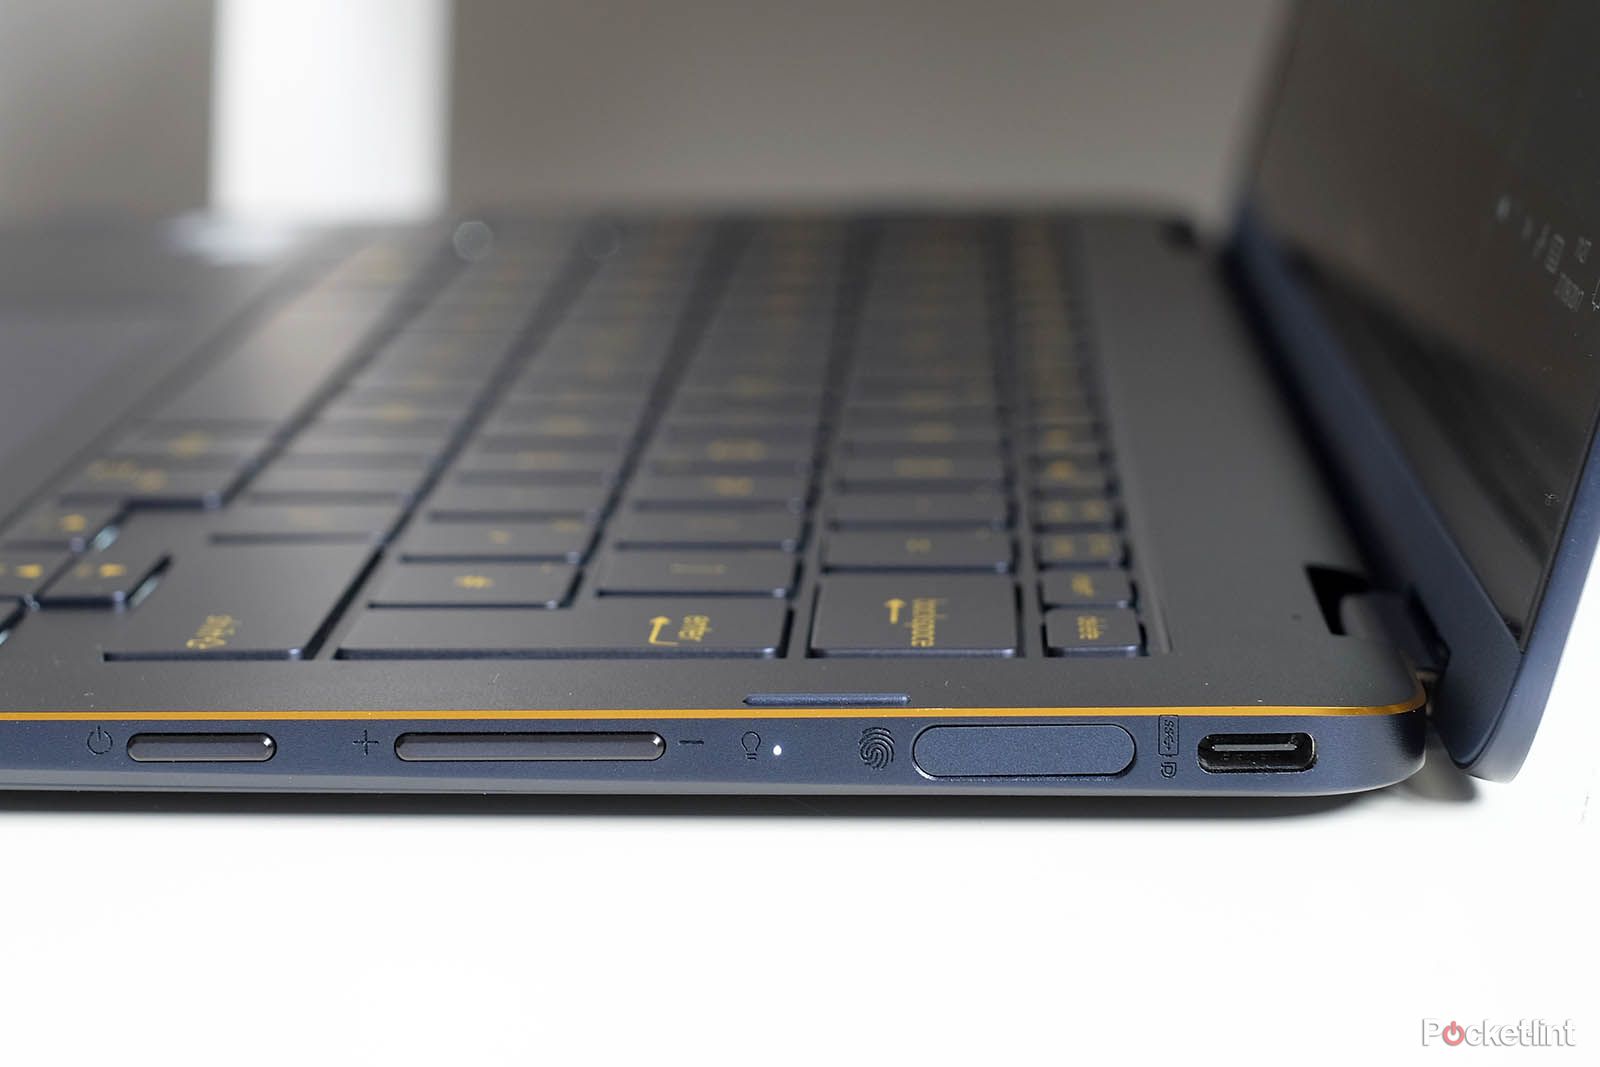 Asus ZenBook Flip S review image 11